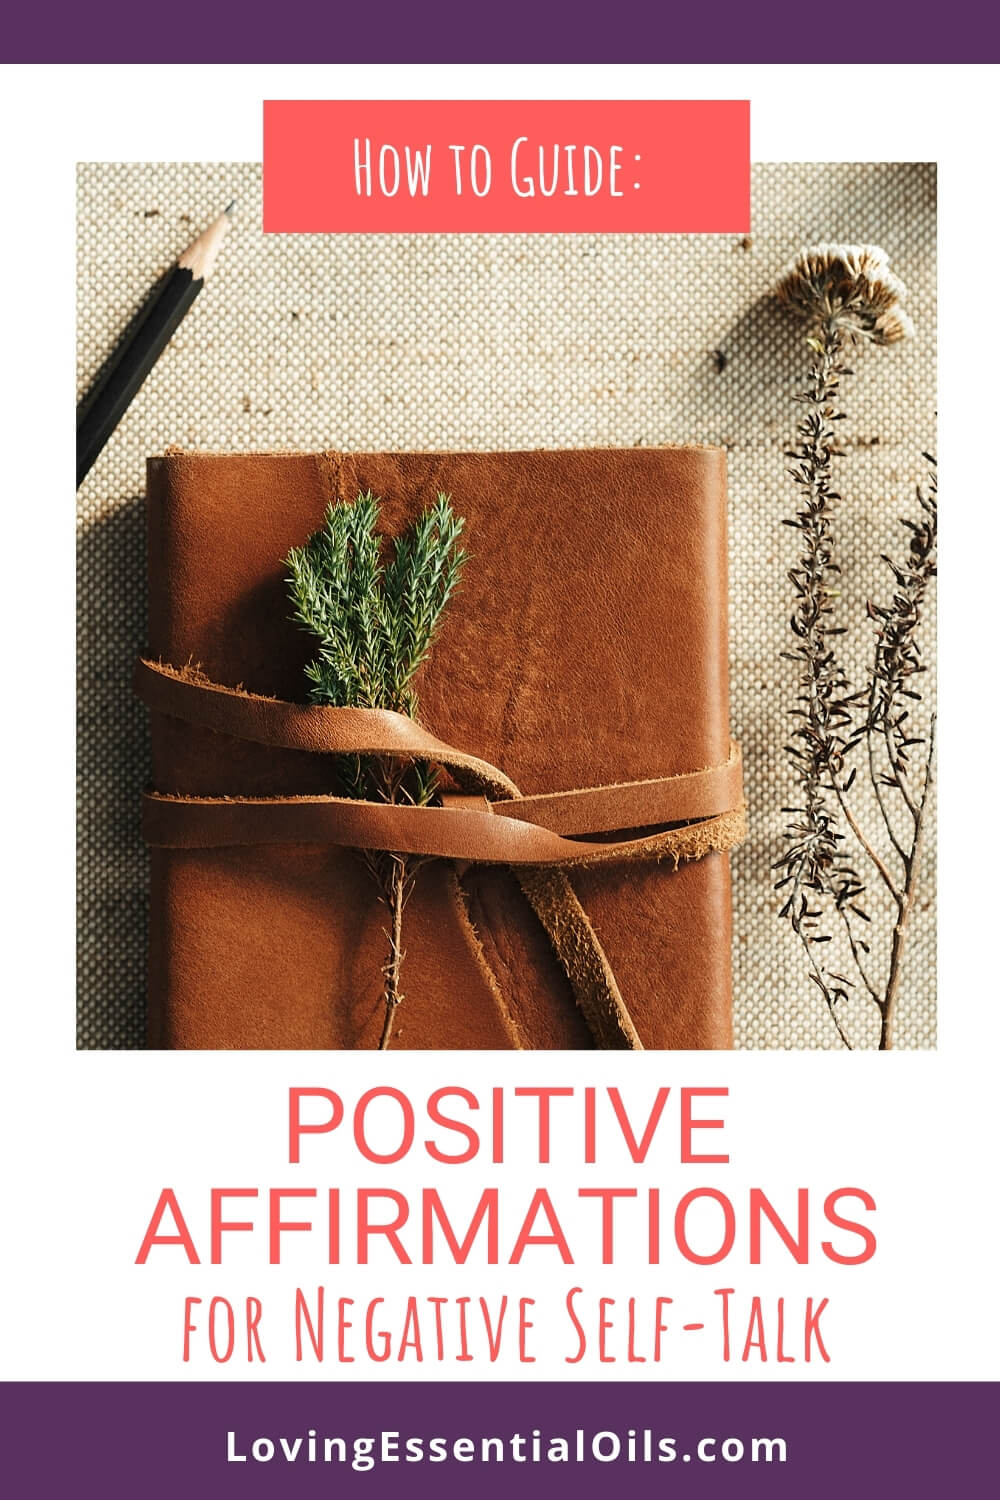 Best Positve Affirmations for Negative Self-Talk by Loving Essential Oils